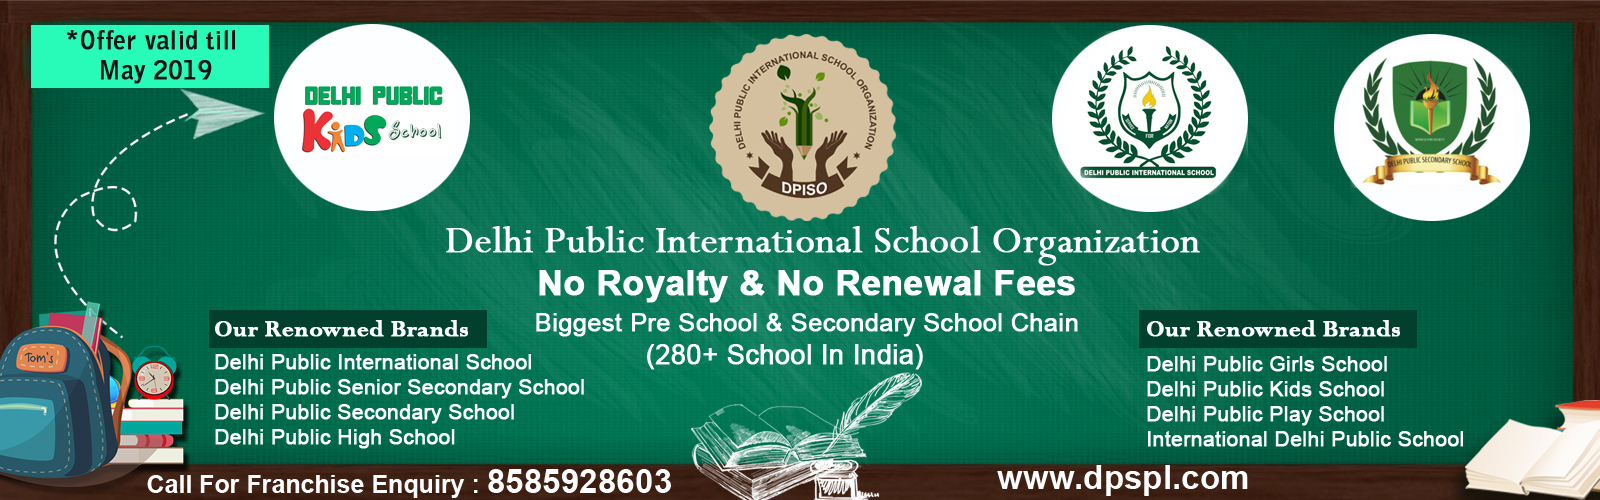 Dps School Franchise Agreement Delhi Public International School Education Franchise